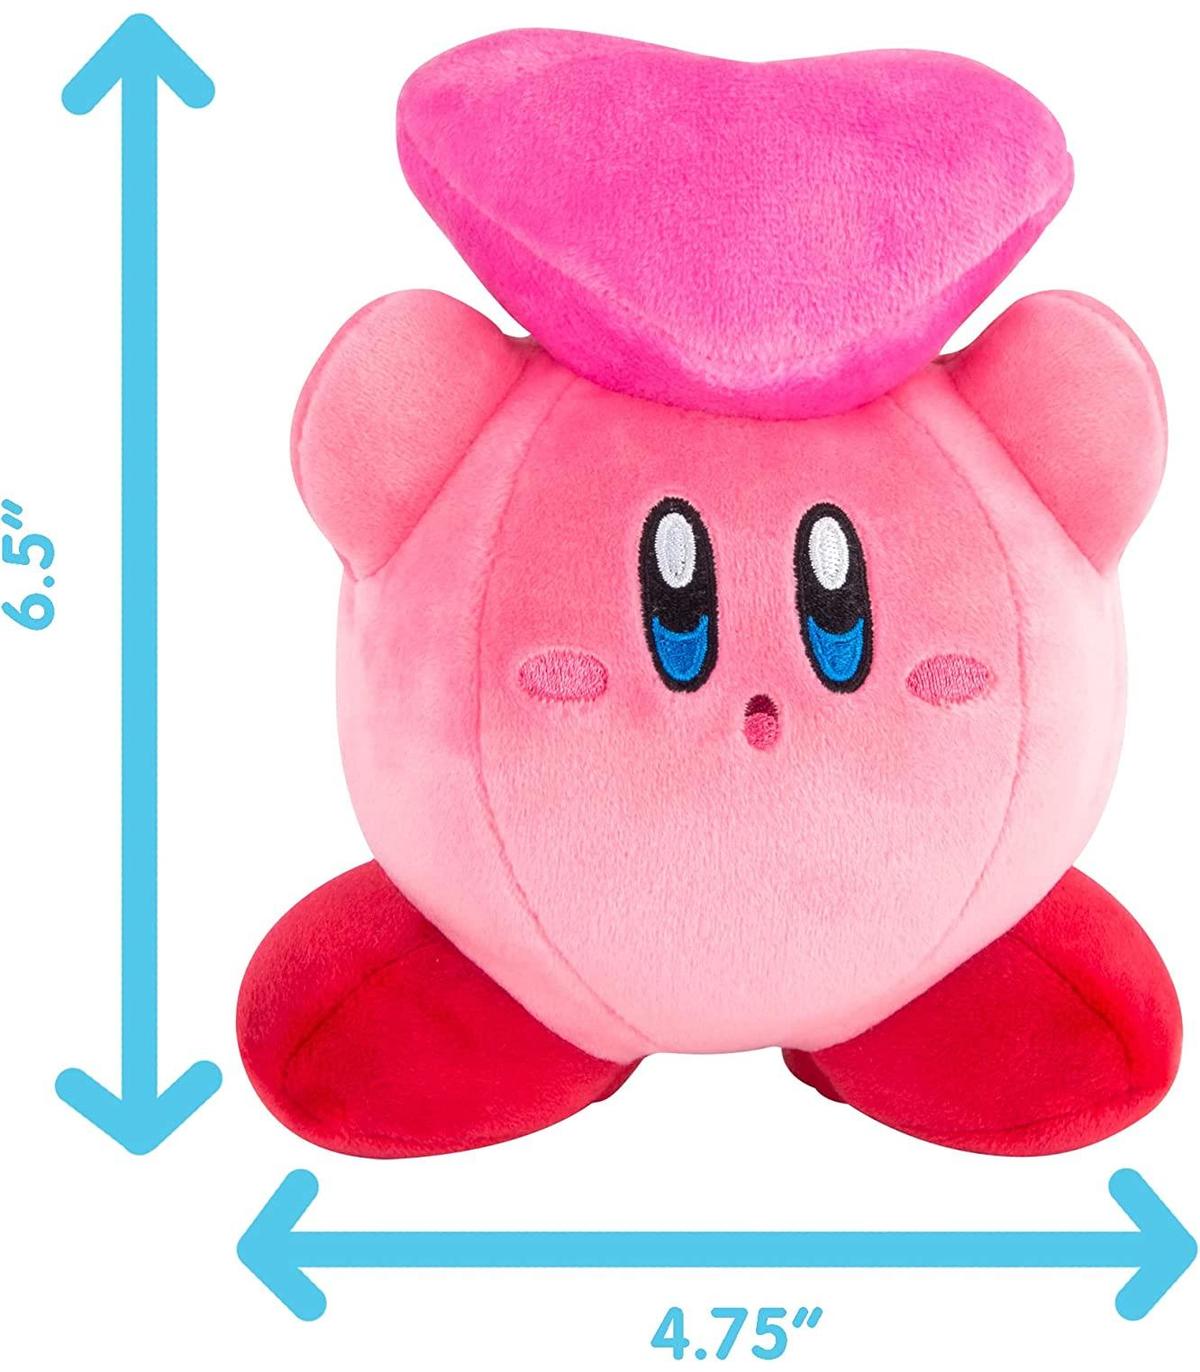 Llavero Peluche Nintendo: Kirby. Merchandising